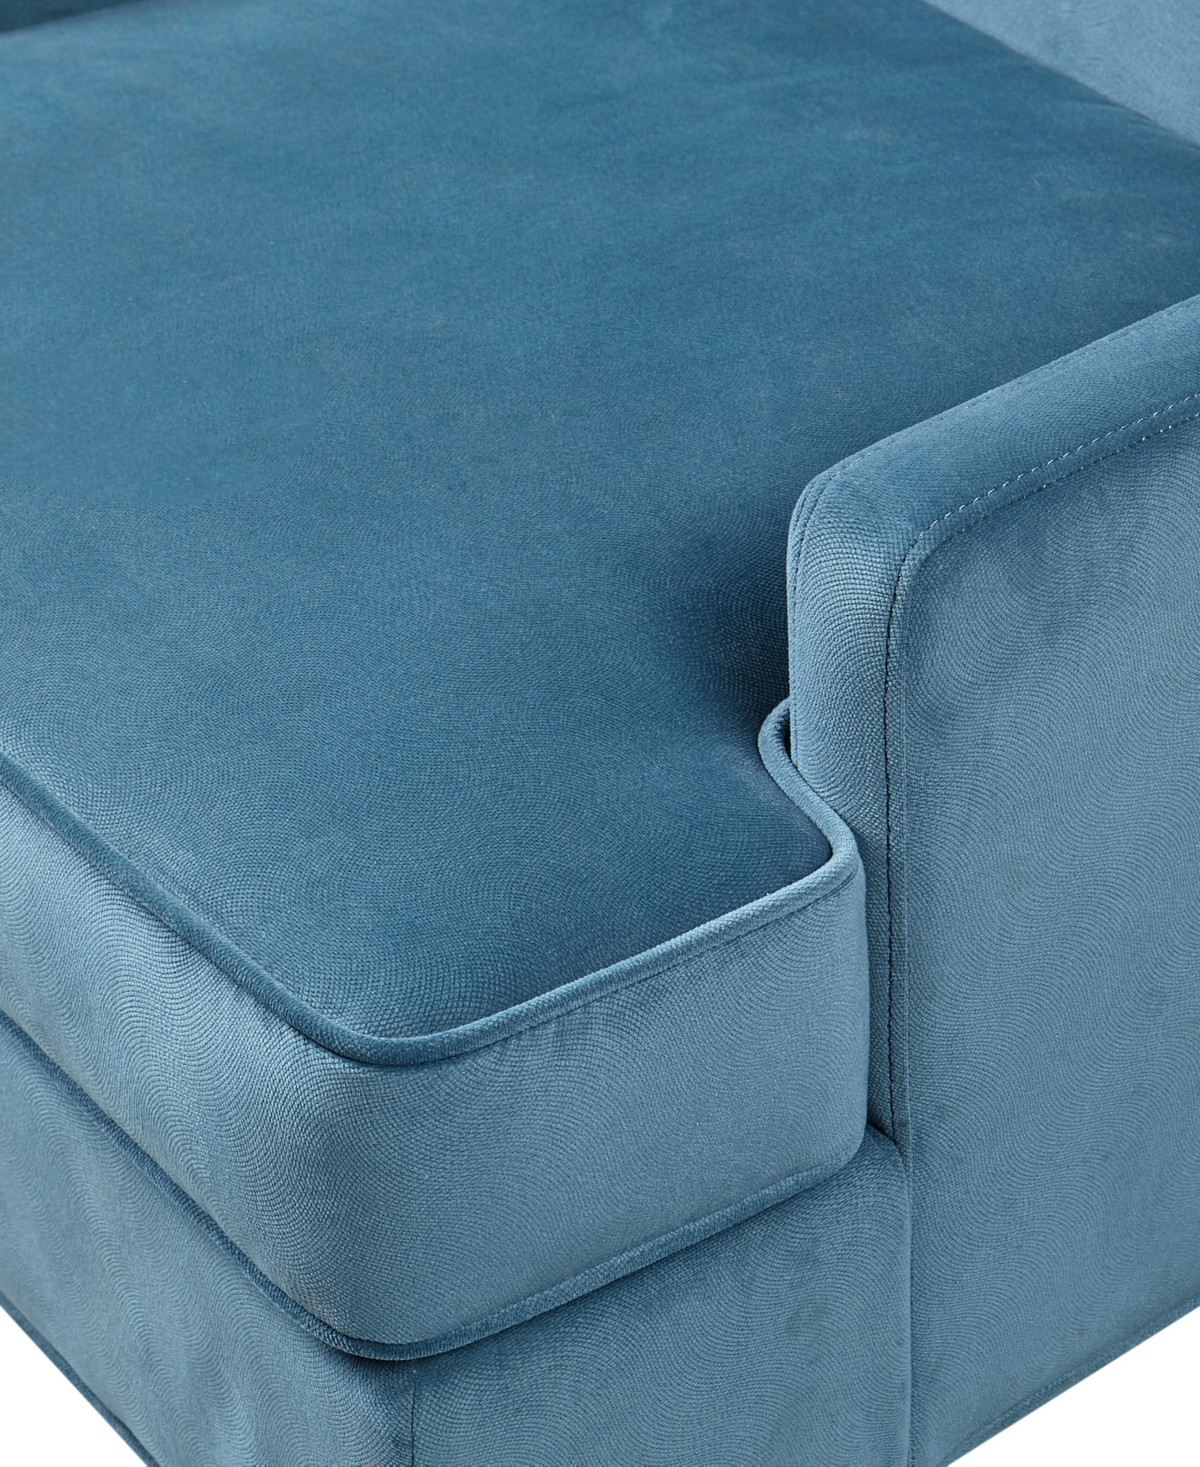 Shop Martha Stewart Collection Martha Stewart Anna 30.75" Wide Fabric Arm Accent Chair In Blue